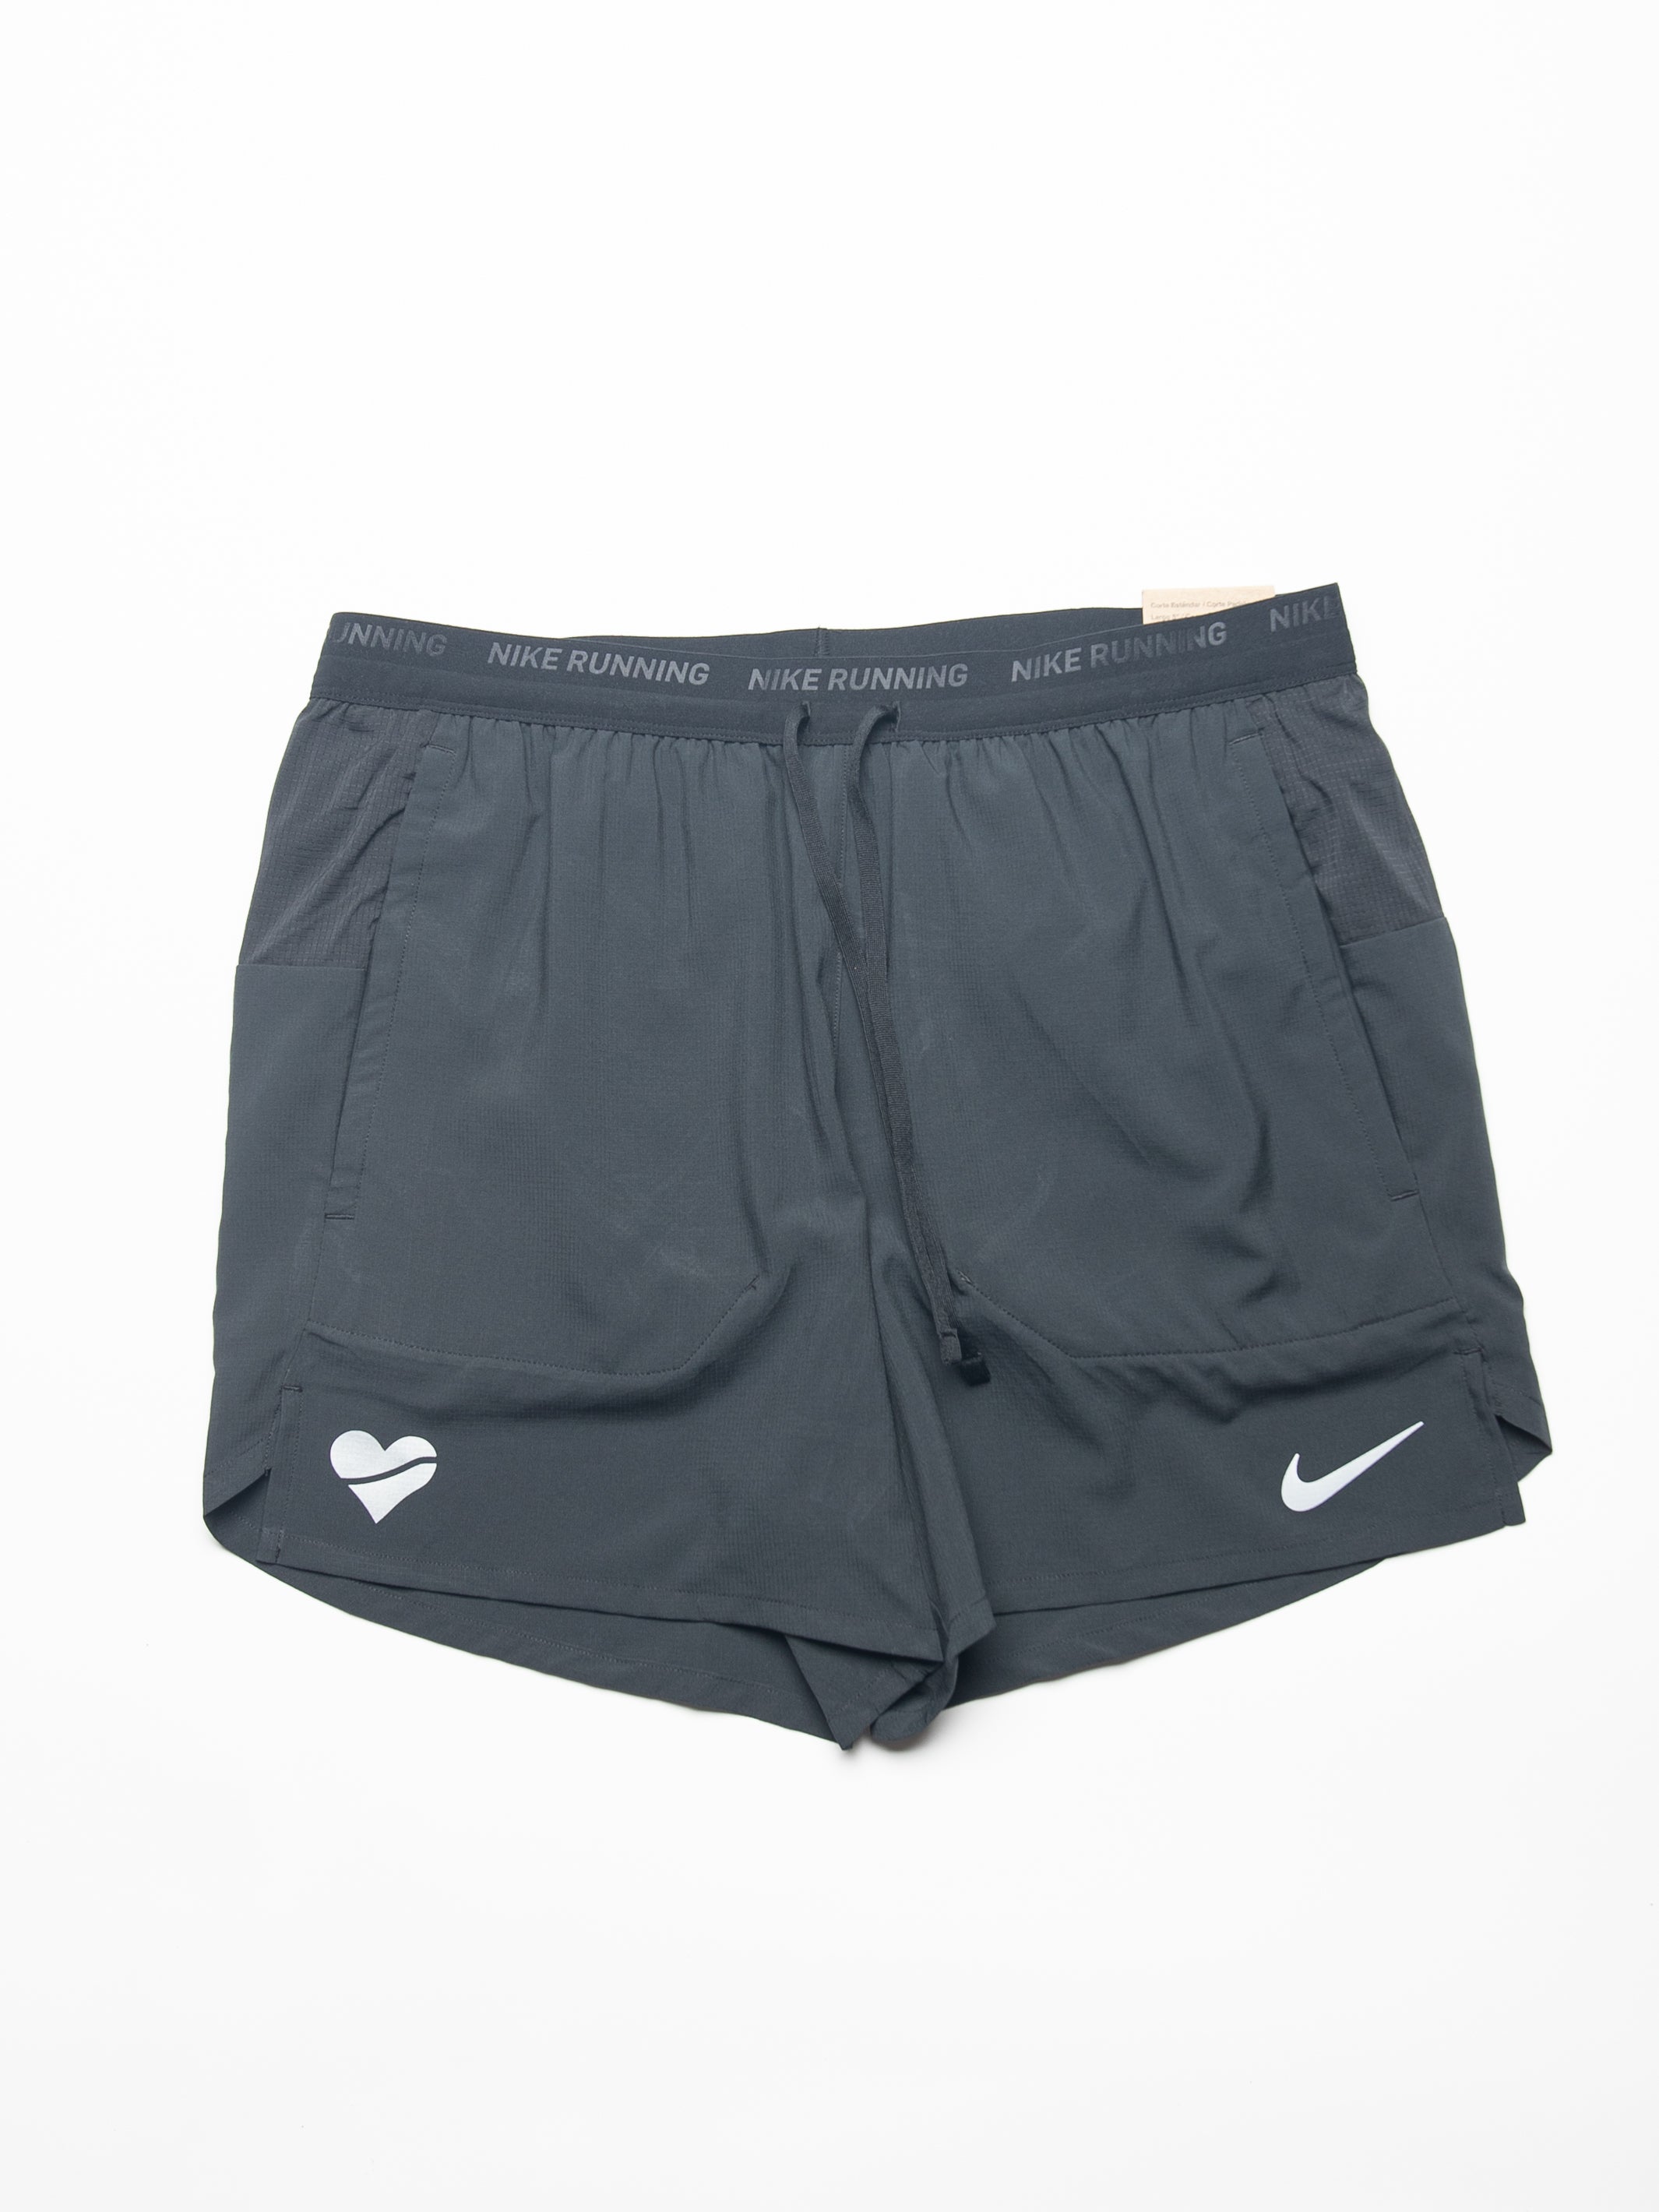 Original Nike Short Pants in Central Division - Clothing, Kuuku Arafat |  Jiji.ug